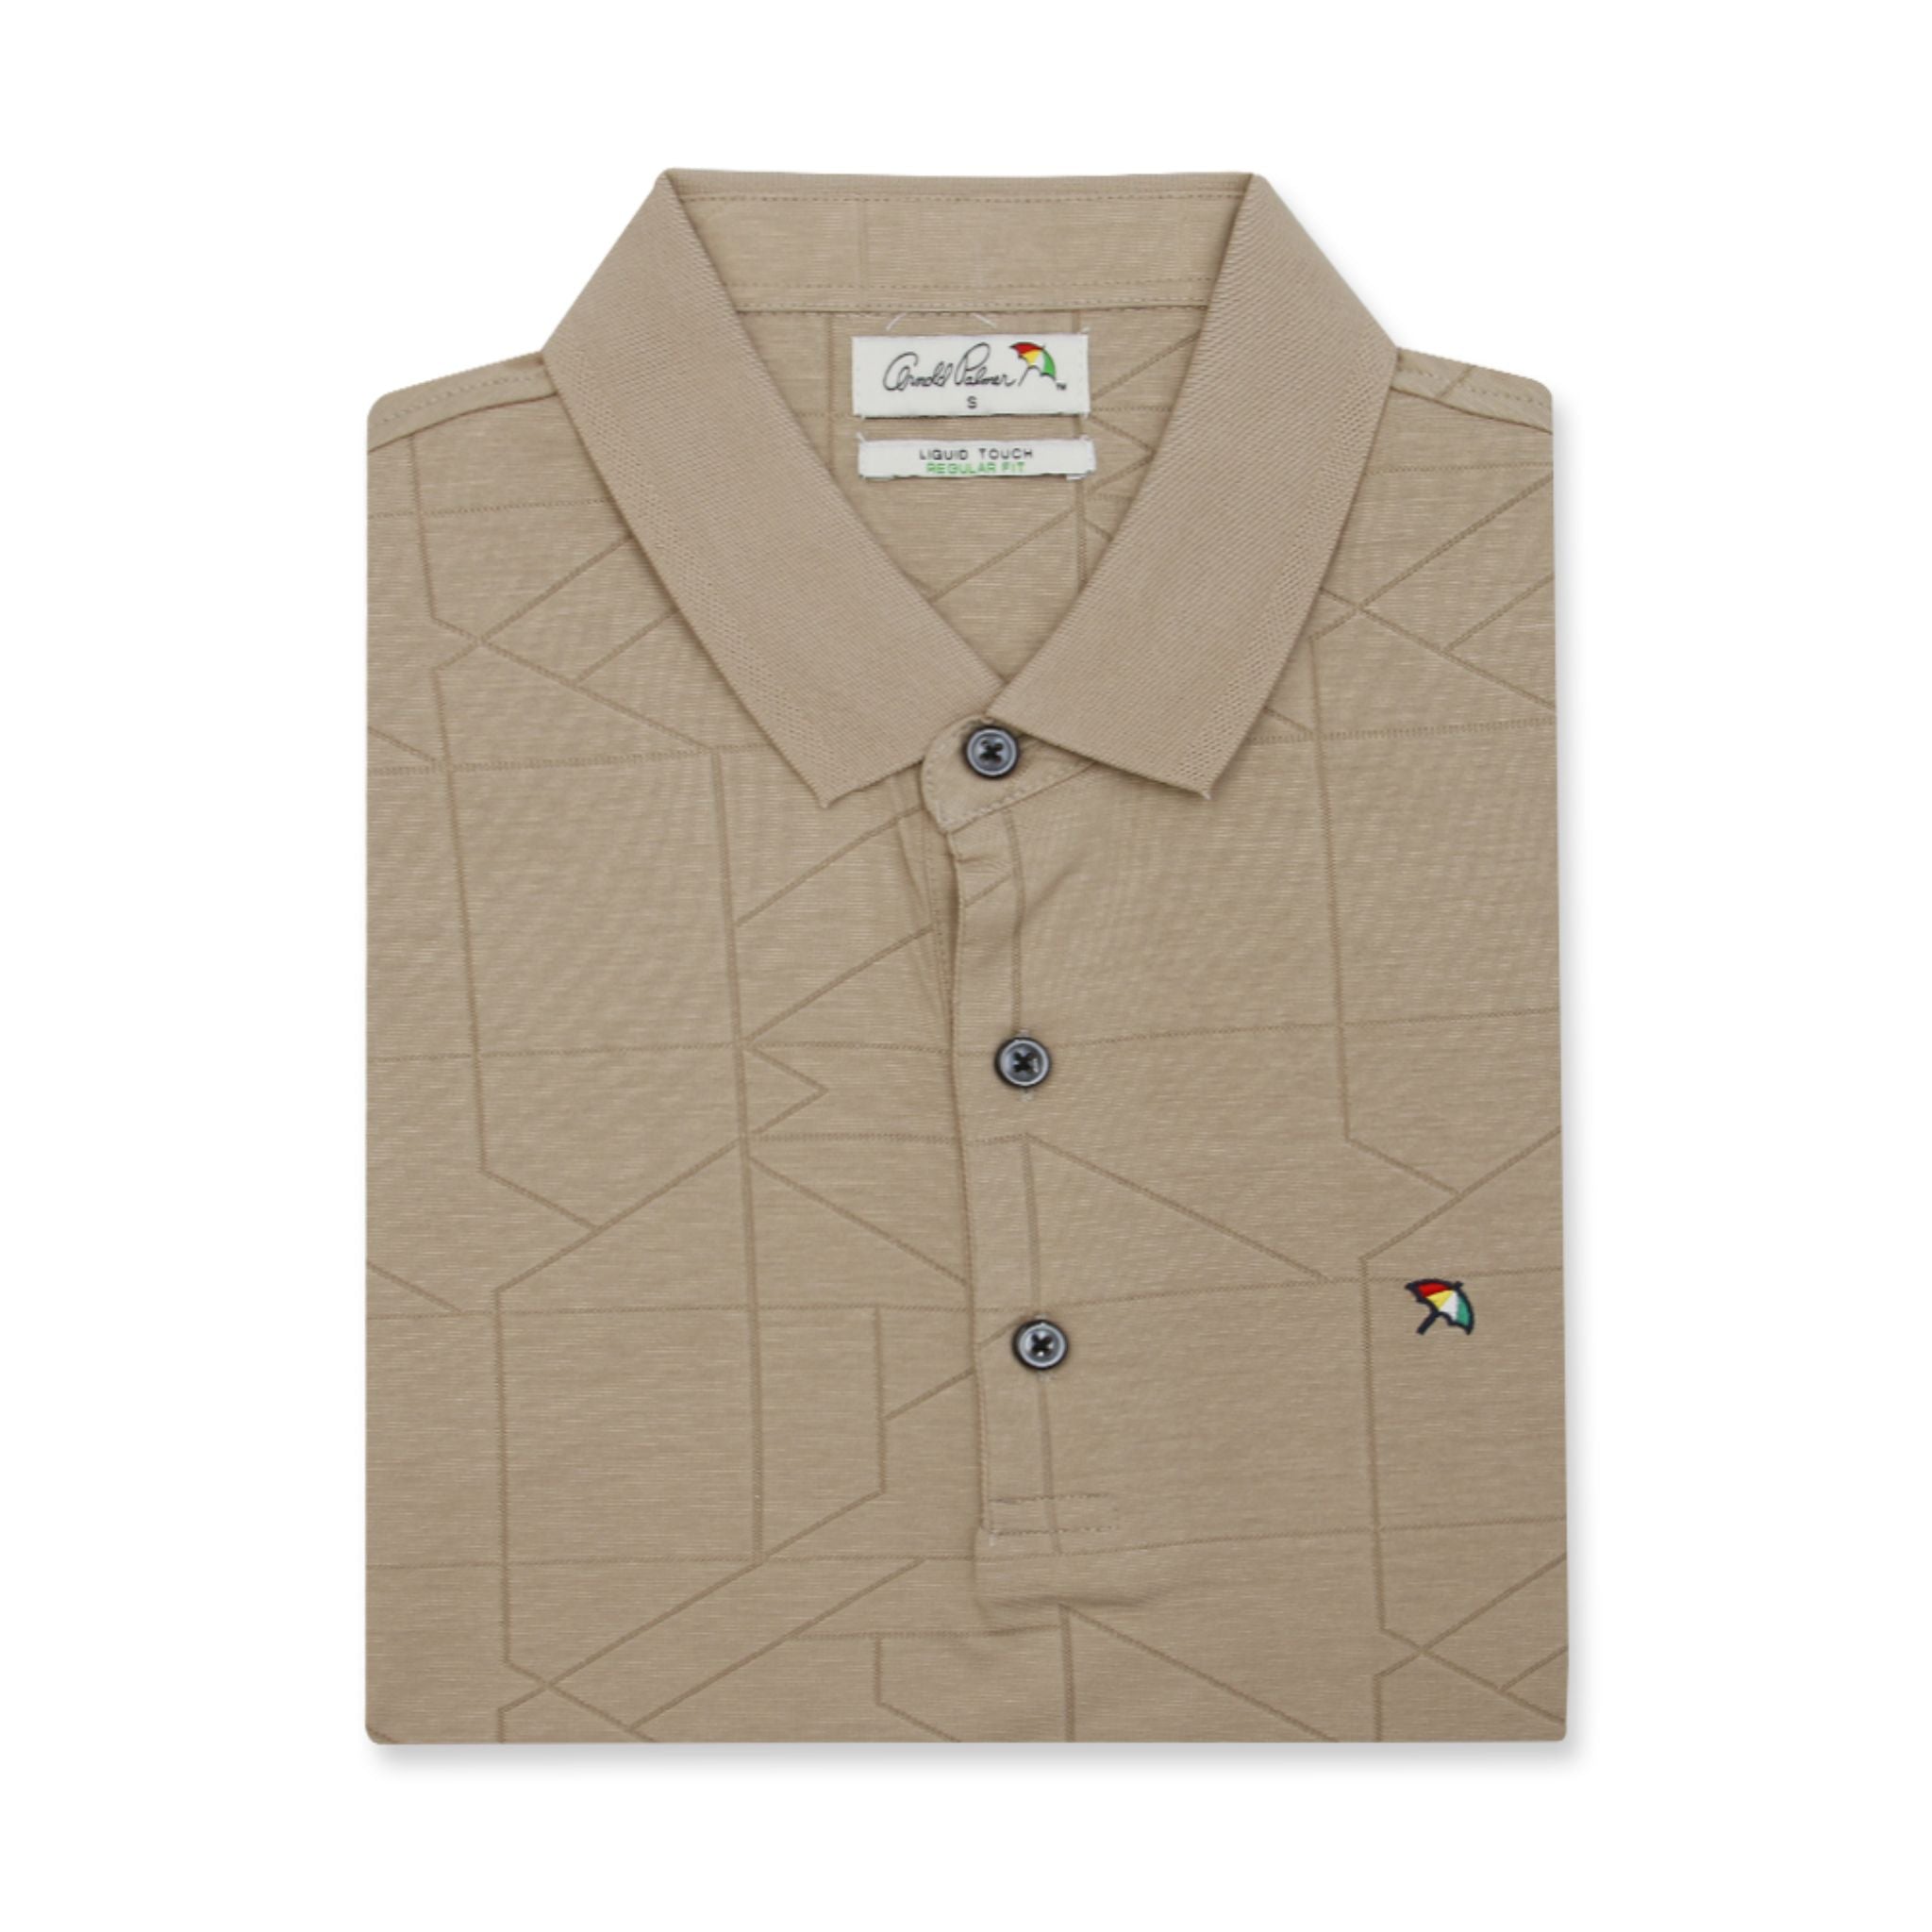 ARNOLD PALMER Short-Sleeved Polo Shirt - Beige